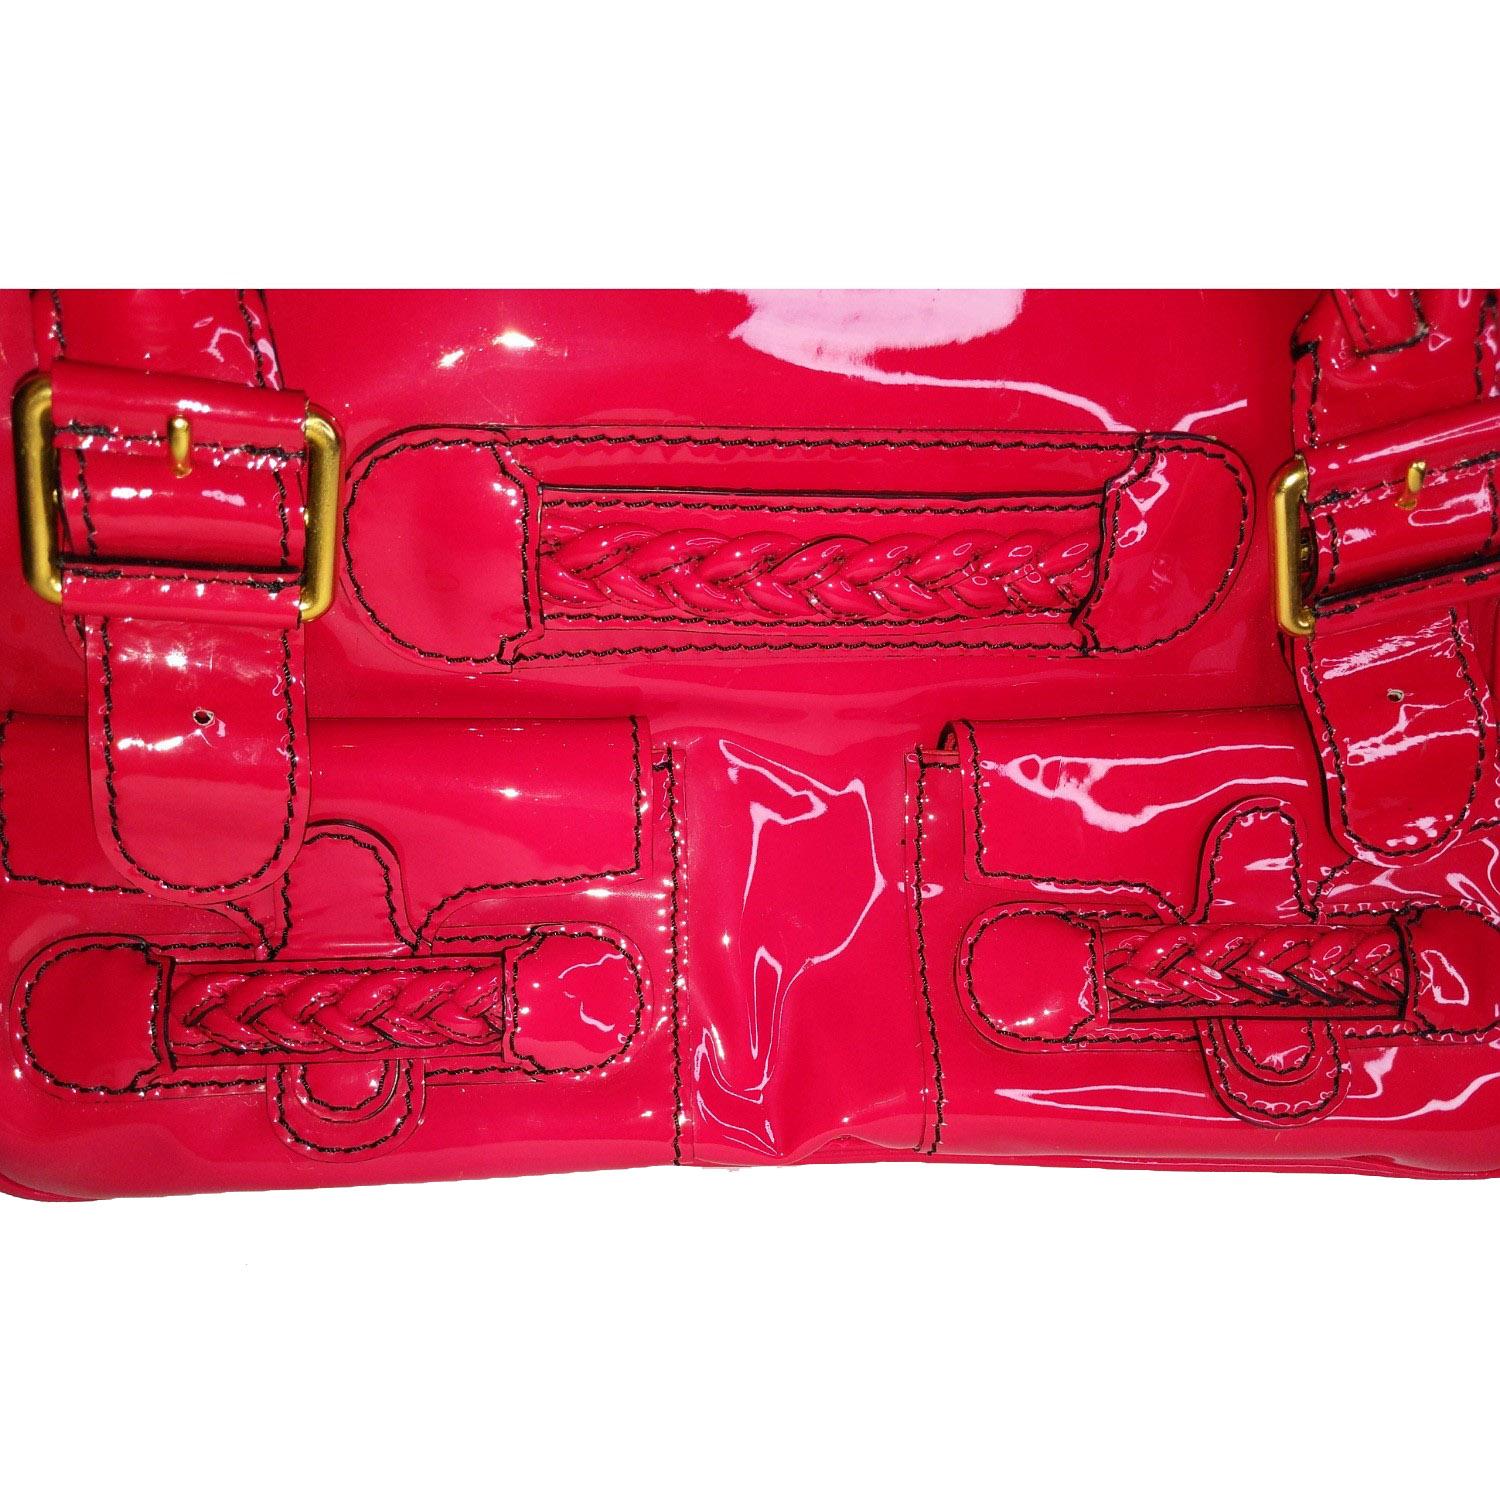 Valentino Red Patent Leather Histoire Tote 1